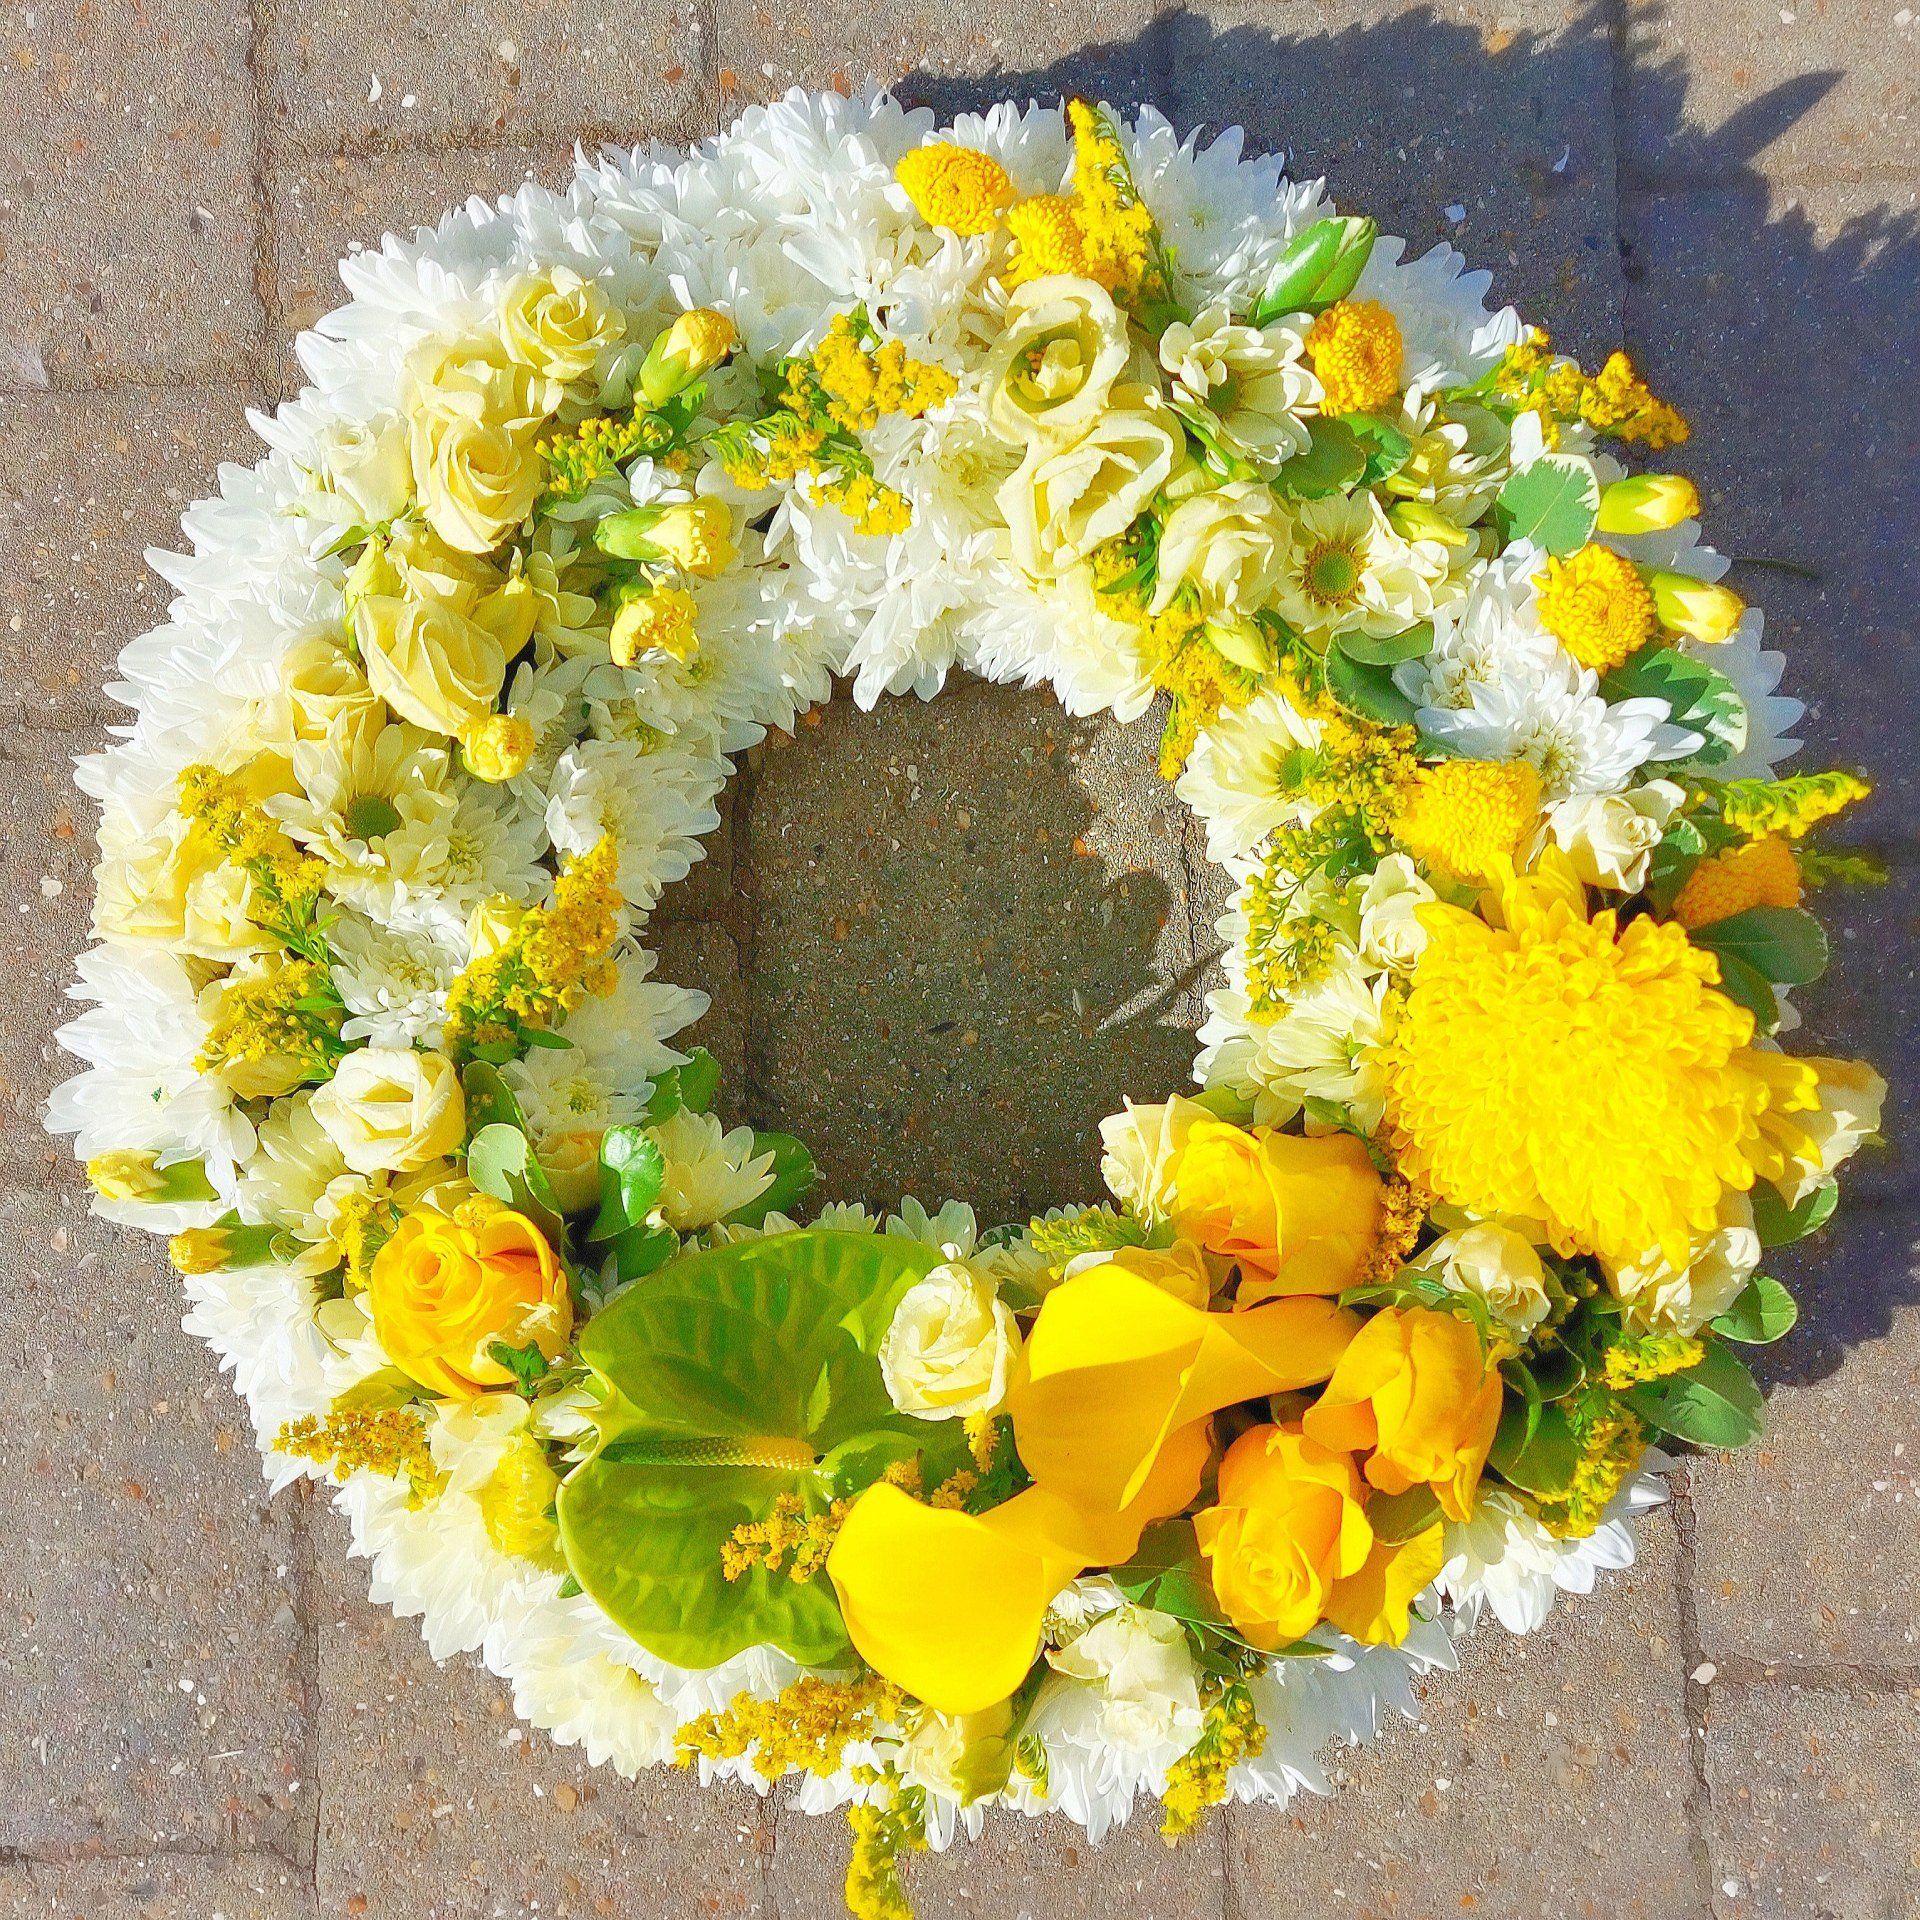 Funeral Flowers Arrangements